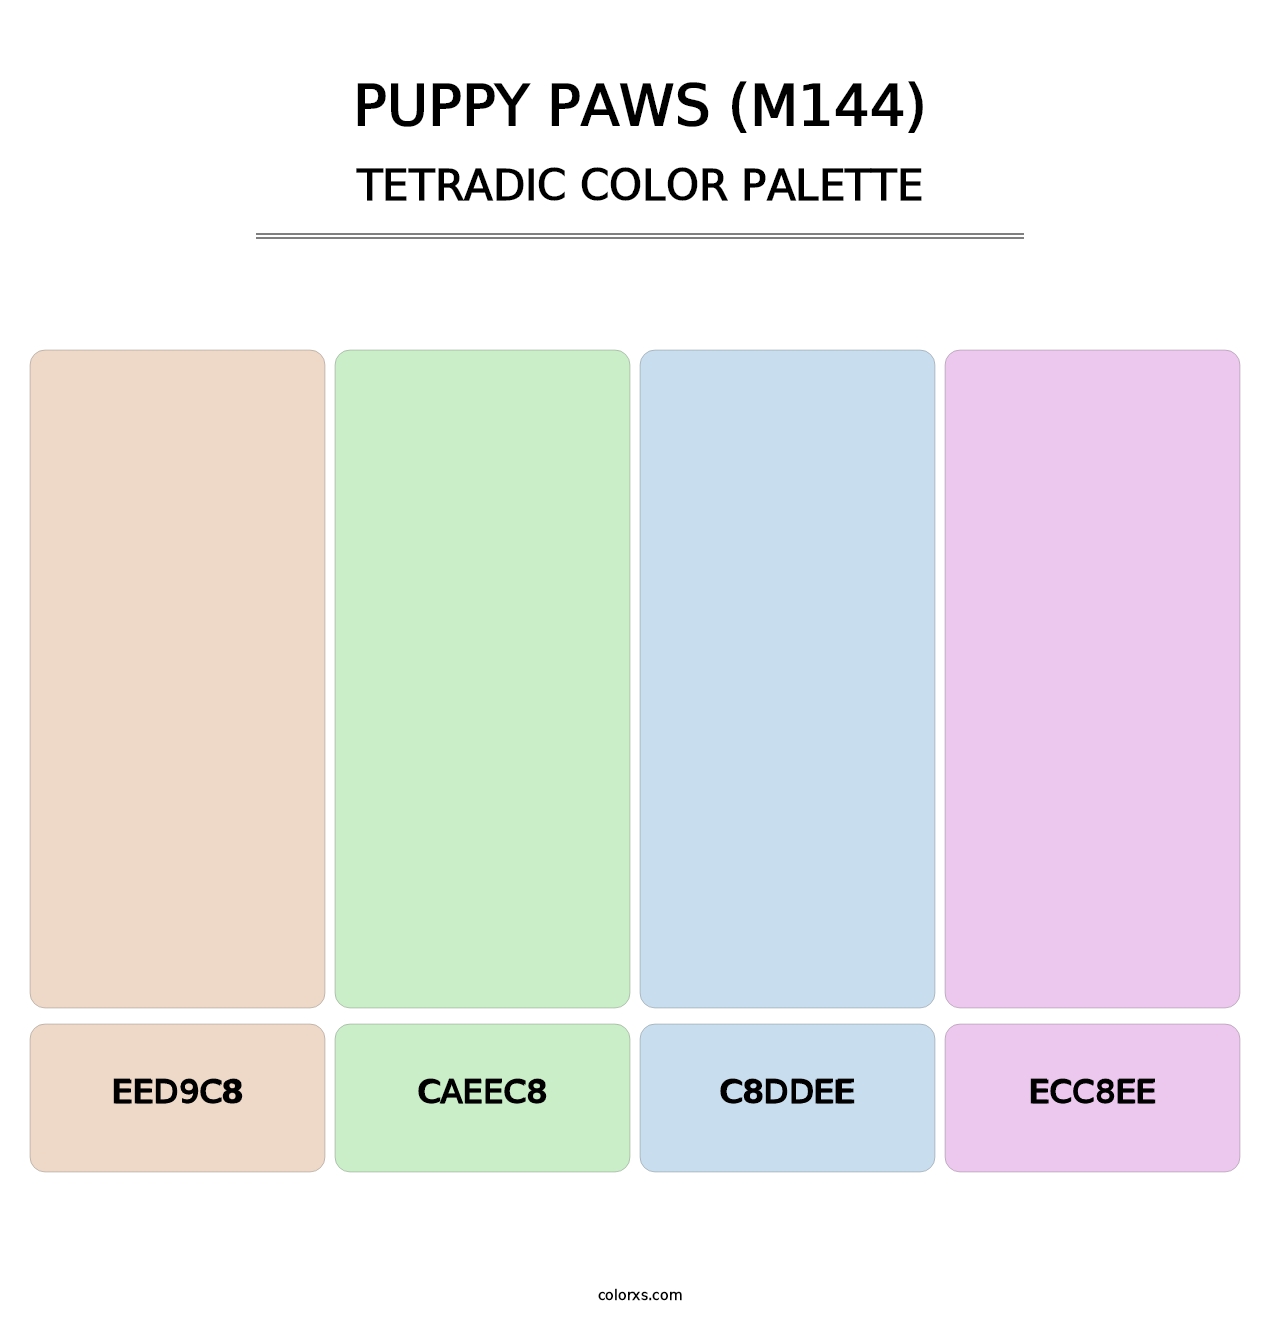 Puppy Paws (M144) - Tetradic Color Palette